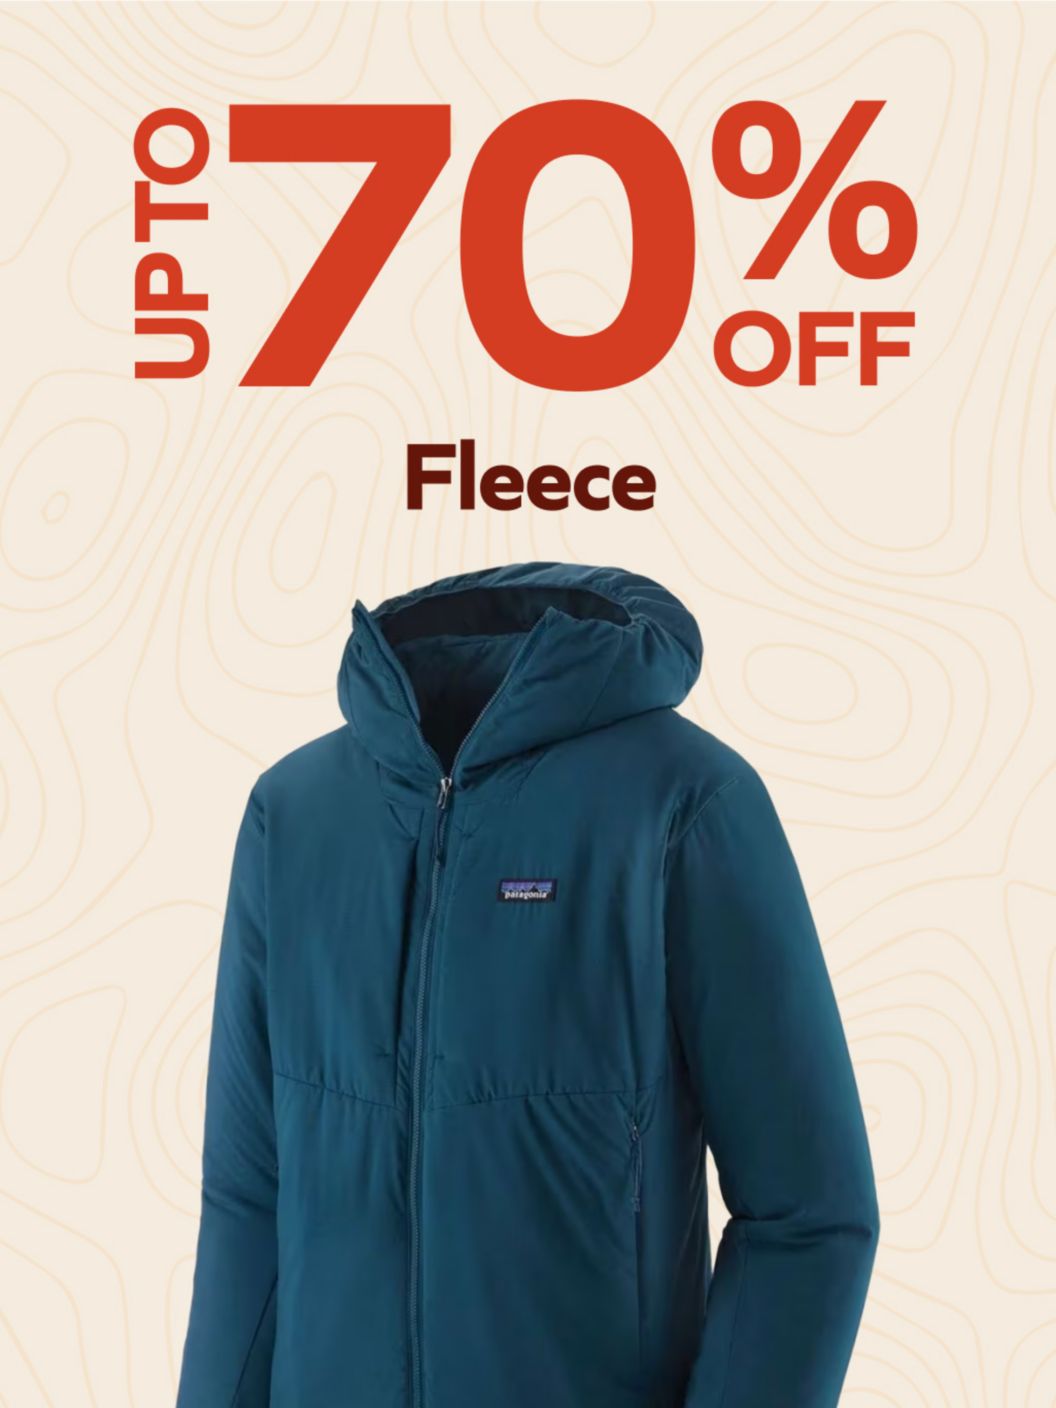 Fleece up to 70% off. 